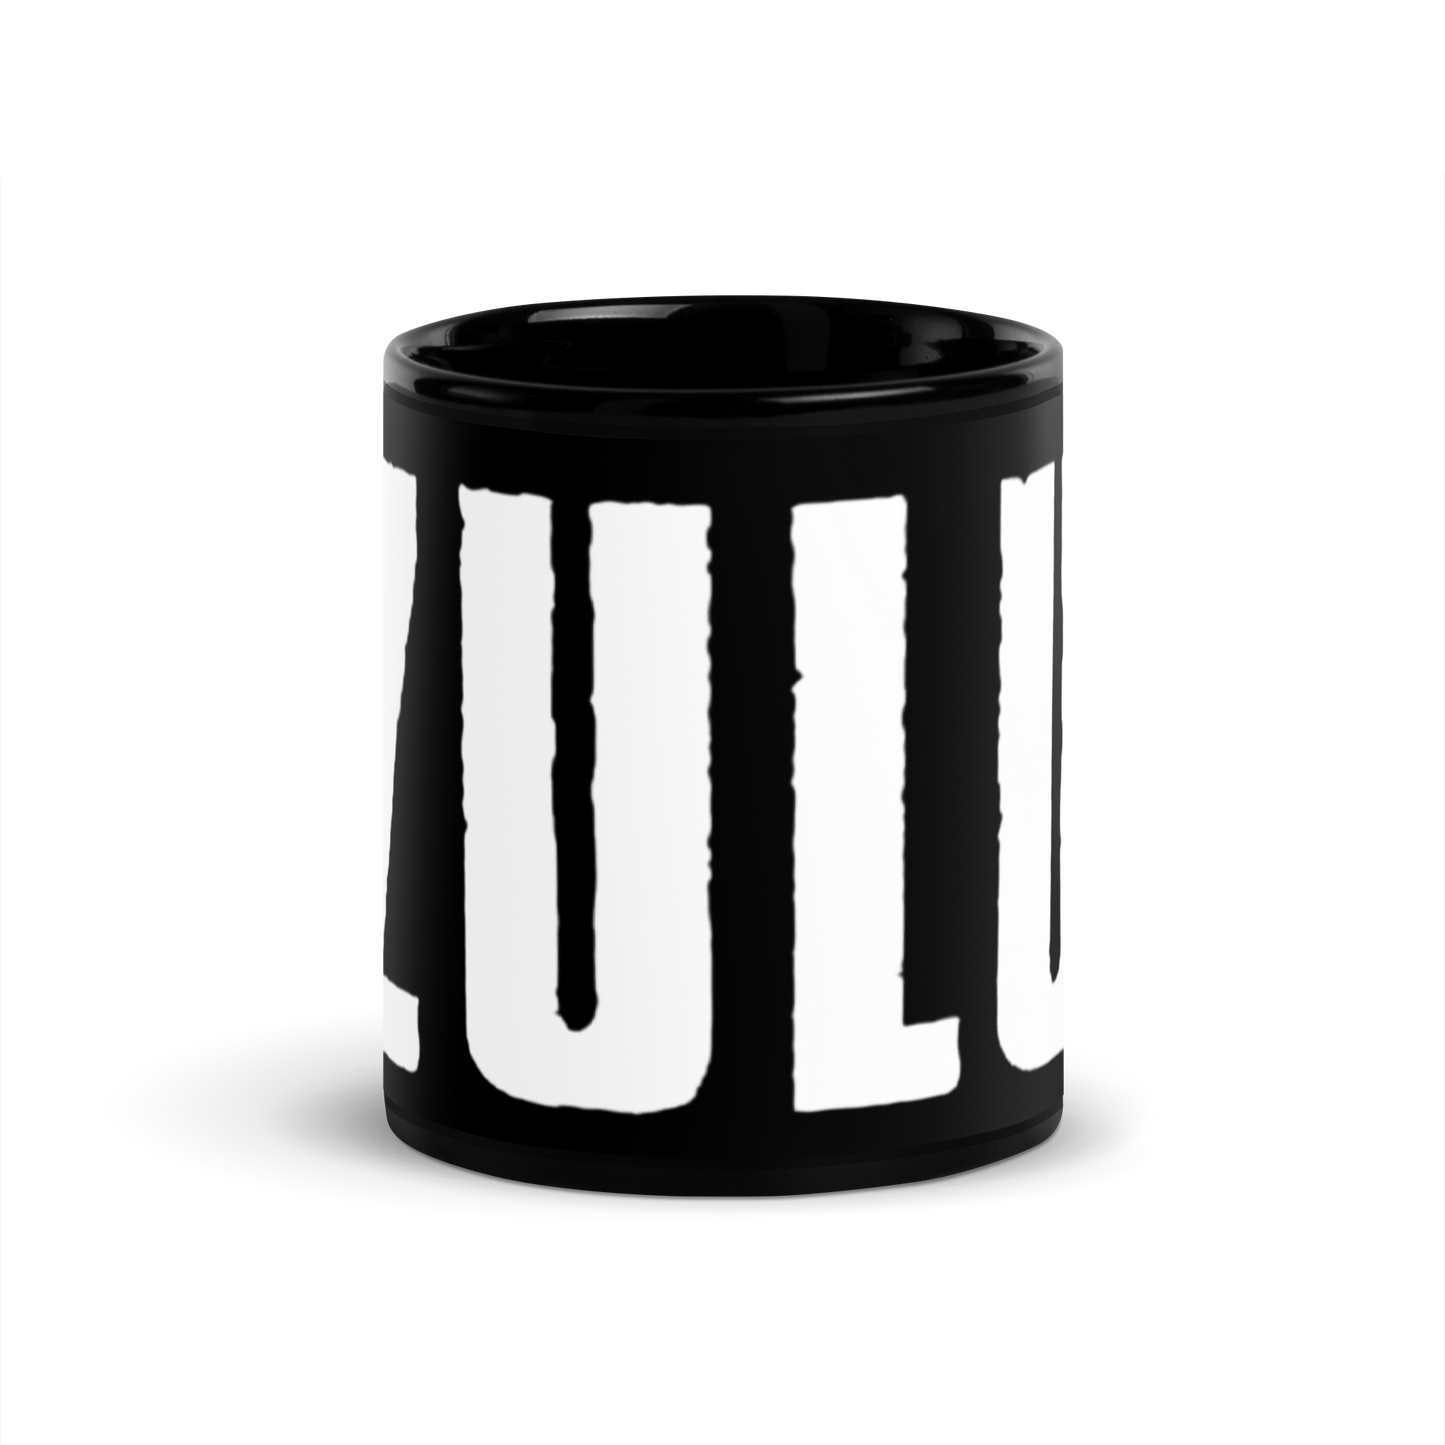 ZULU (Black Mug)